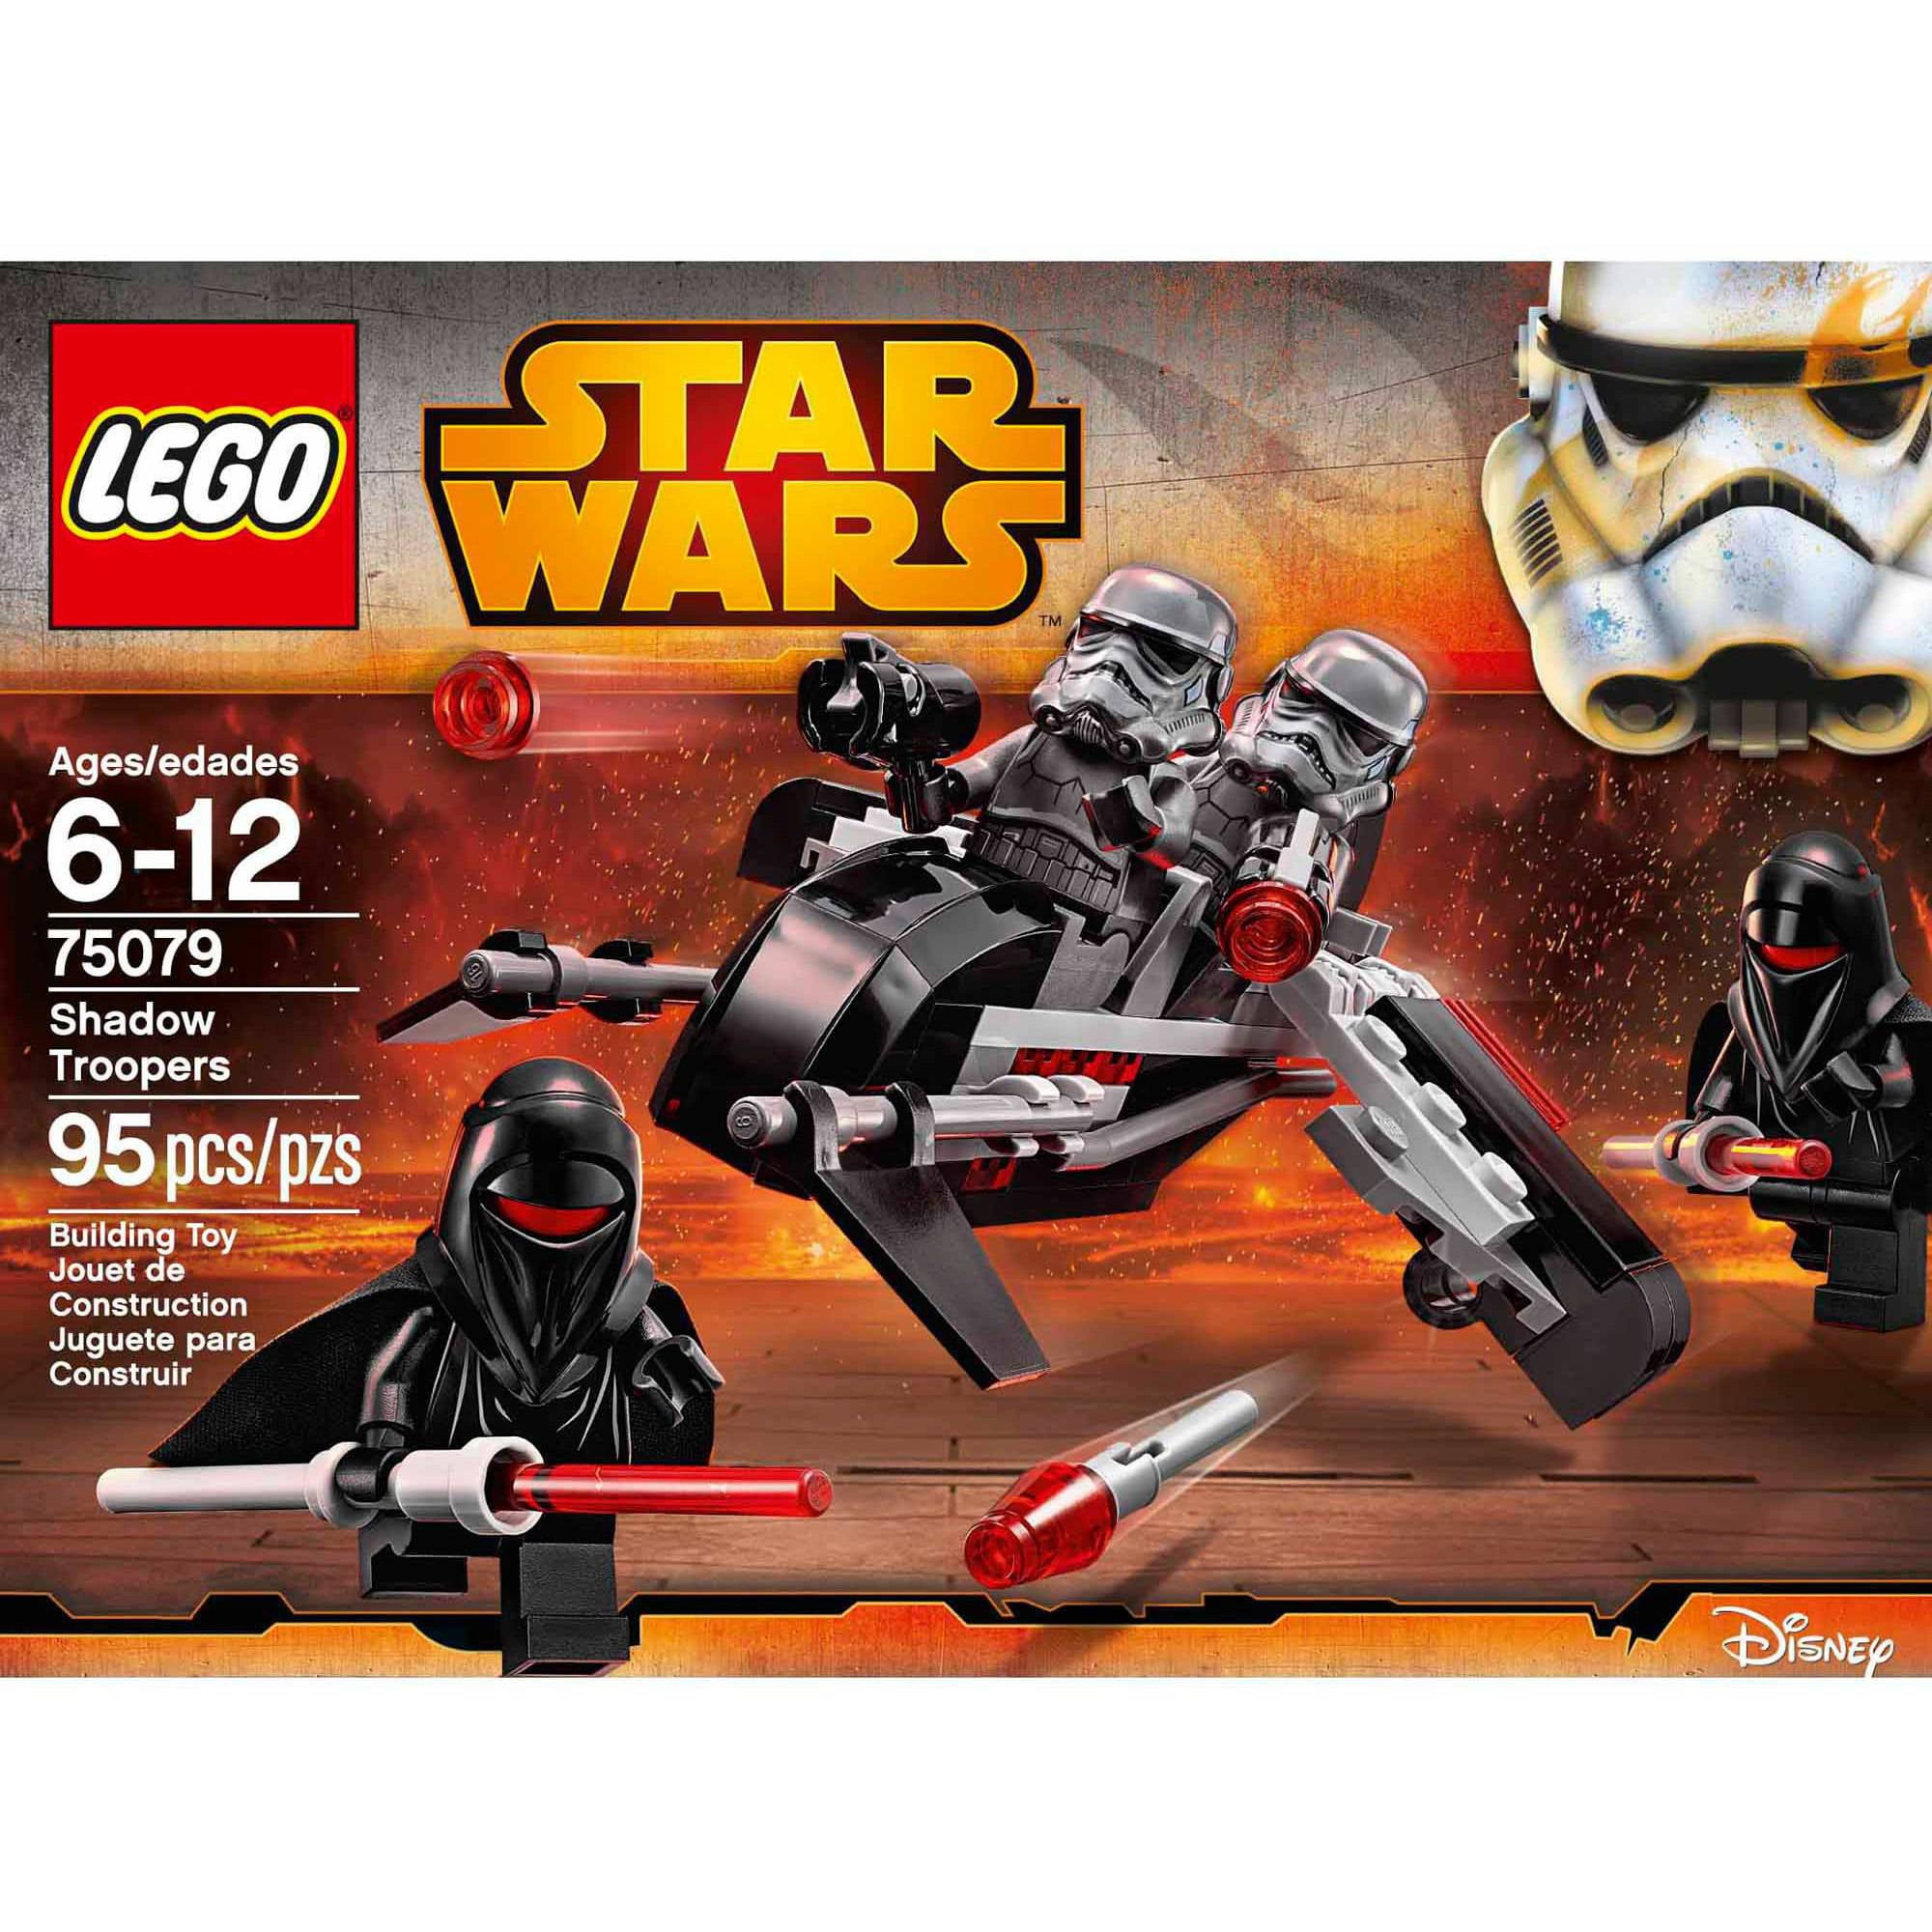 Genuine LEGO Minifigure Star Wars Set 75079 Shadow Stormtrooper sw0603 